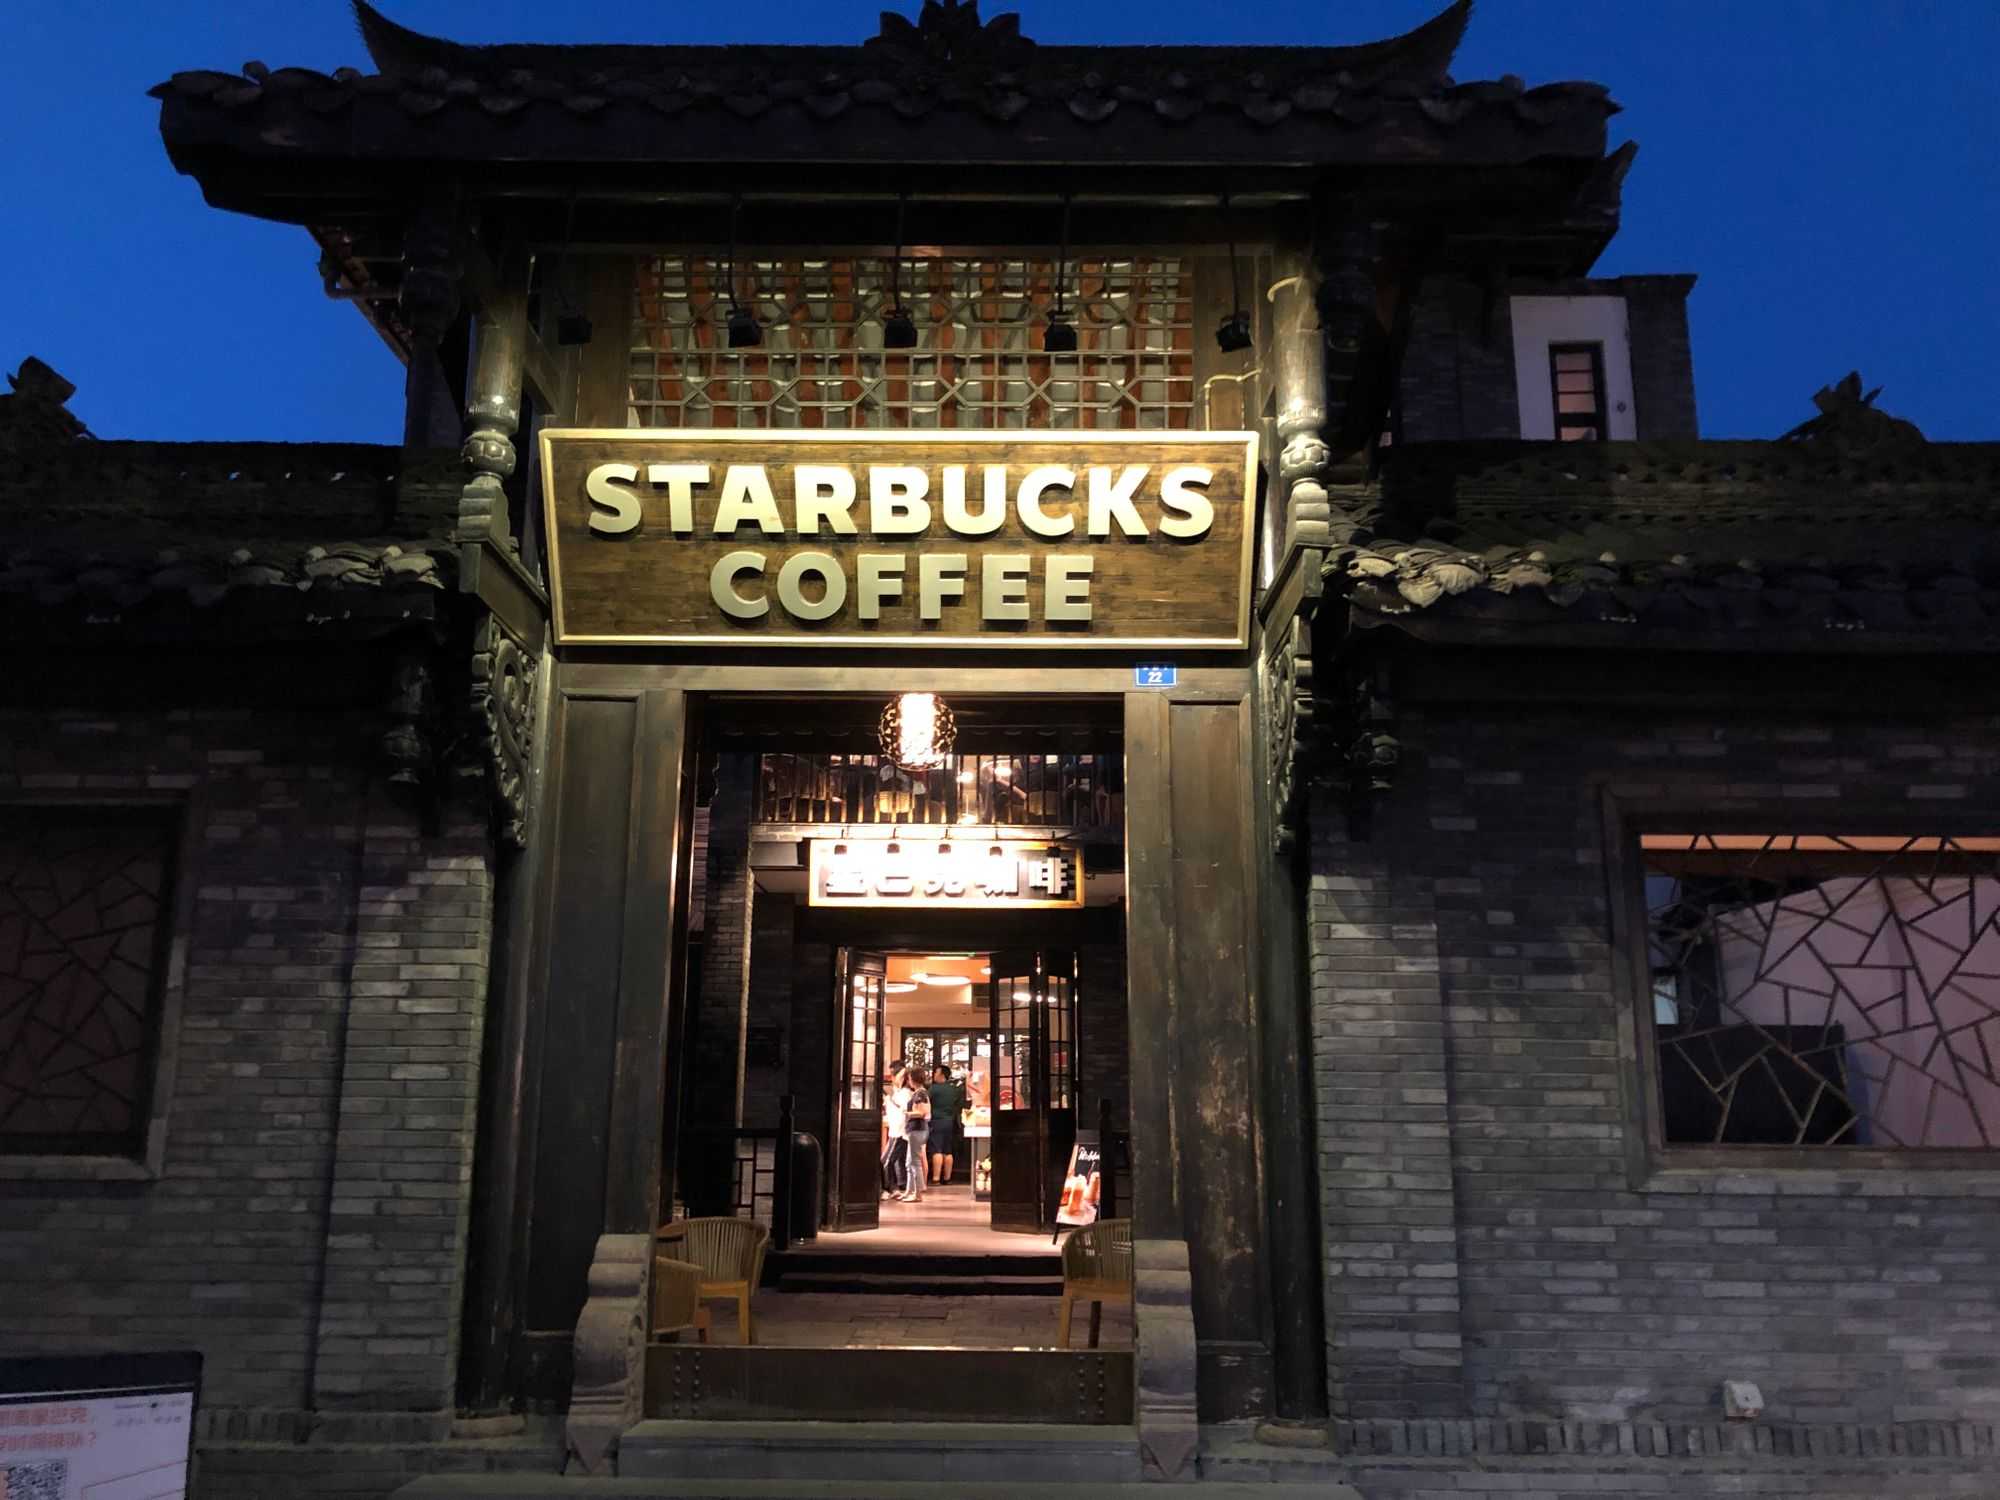 Starbucks Coffee in Chengdu (Image by author)